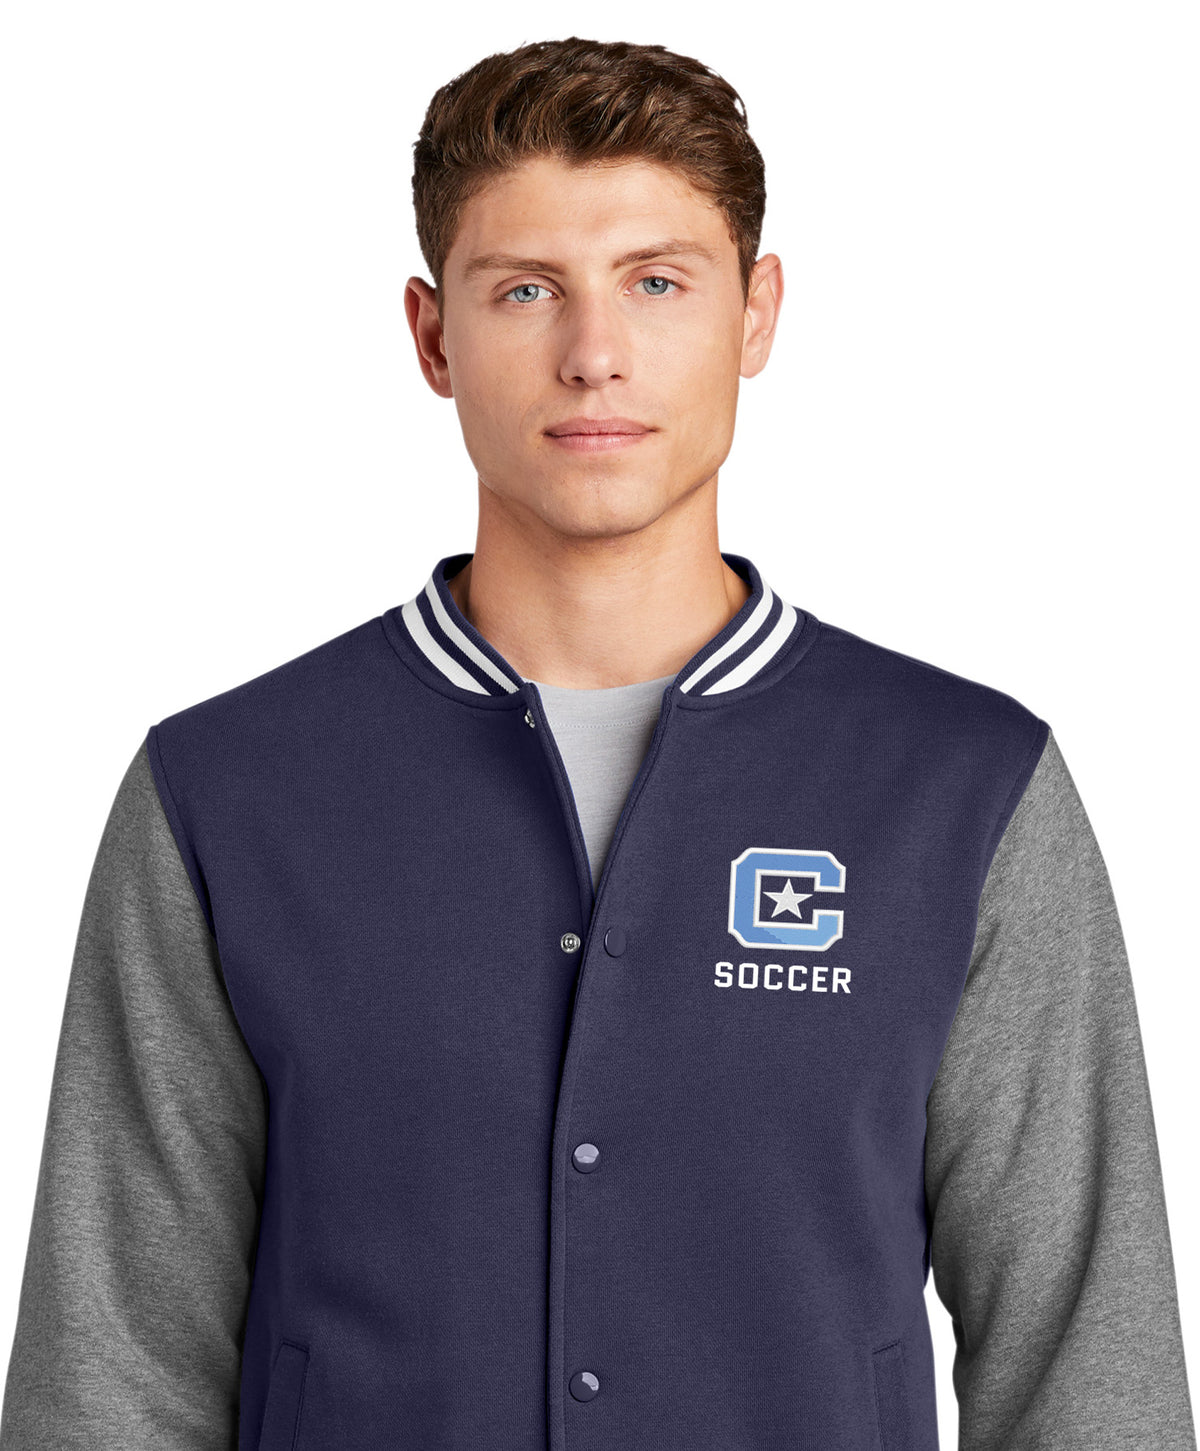 The Citadel C, Club Sports - Soccer Fleece Letterman Jacket